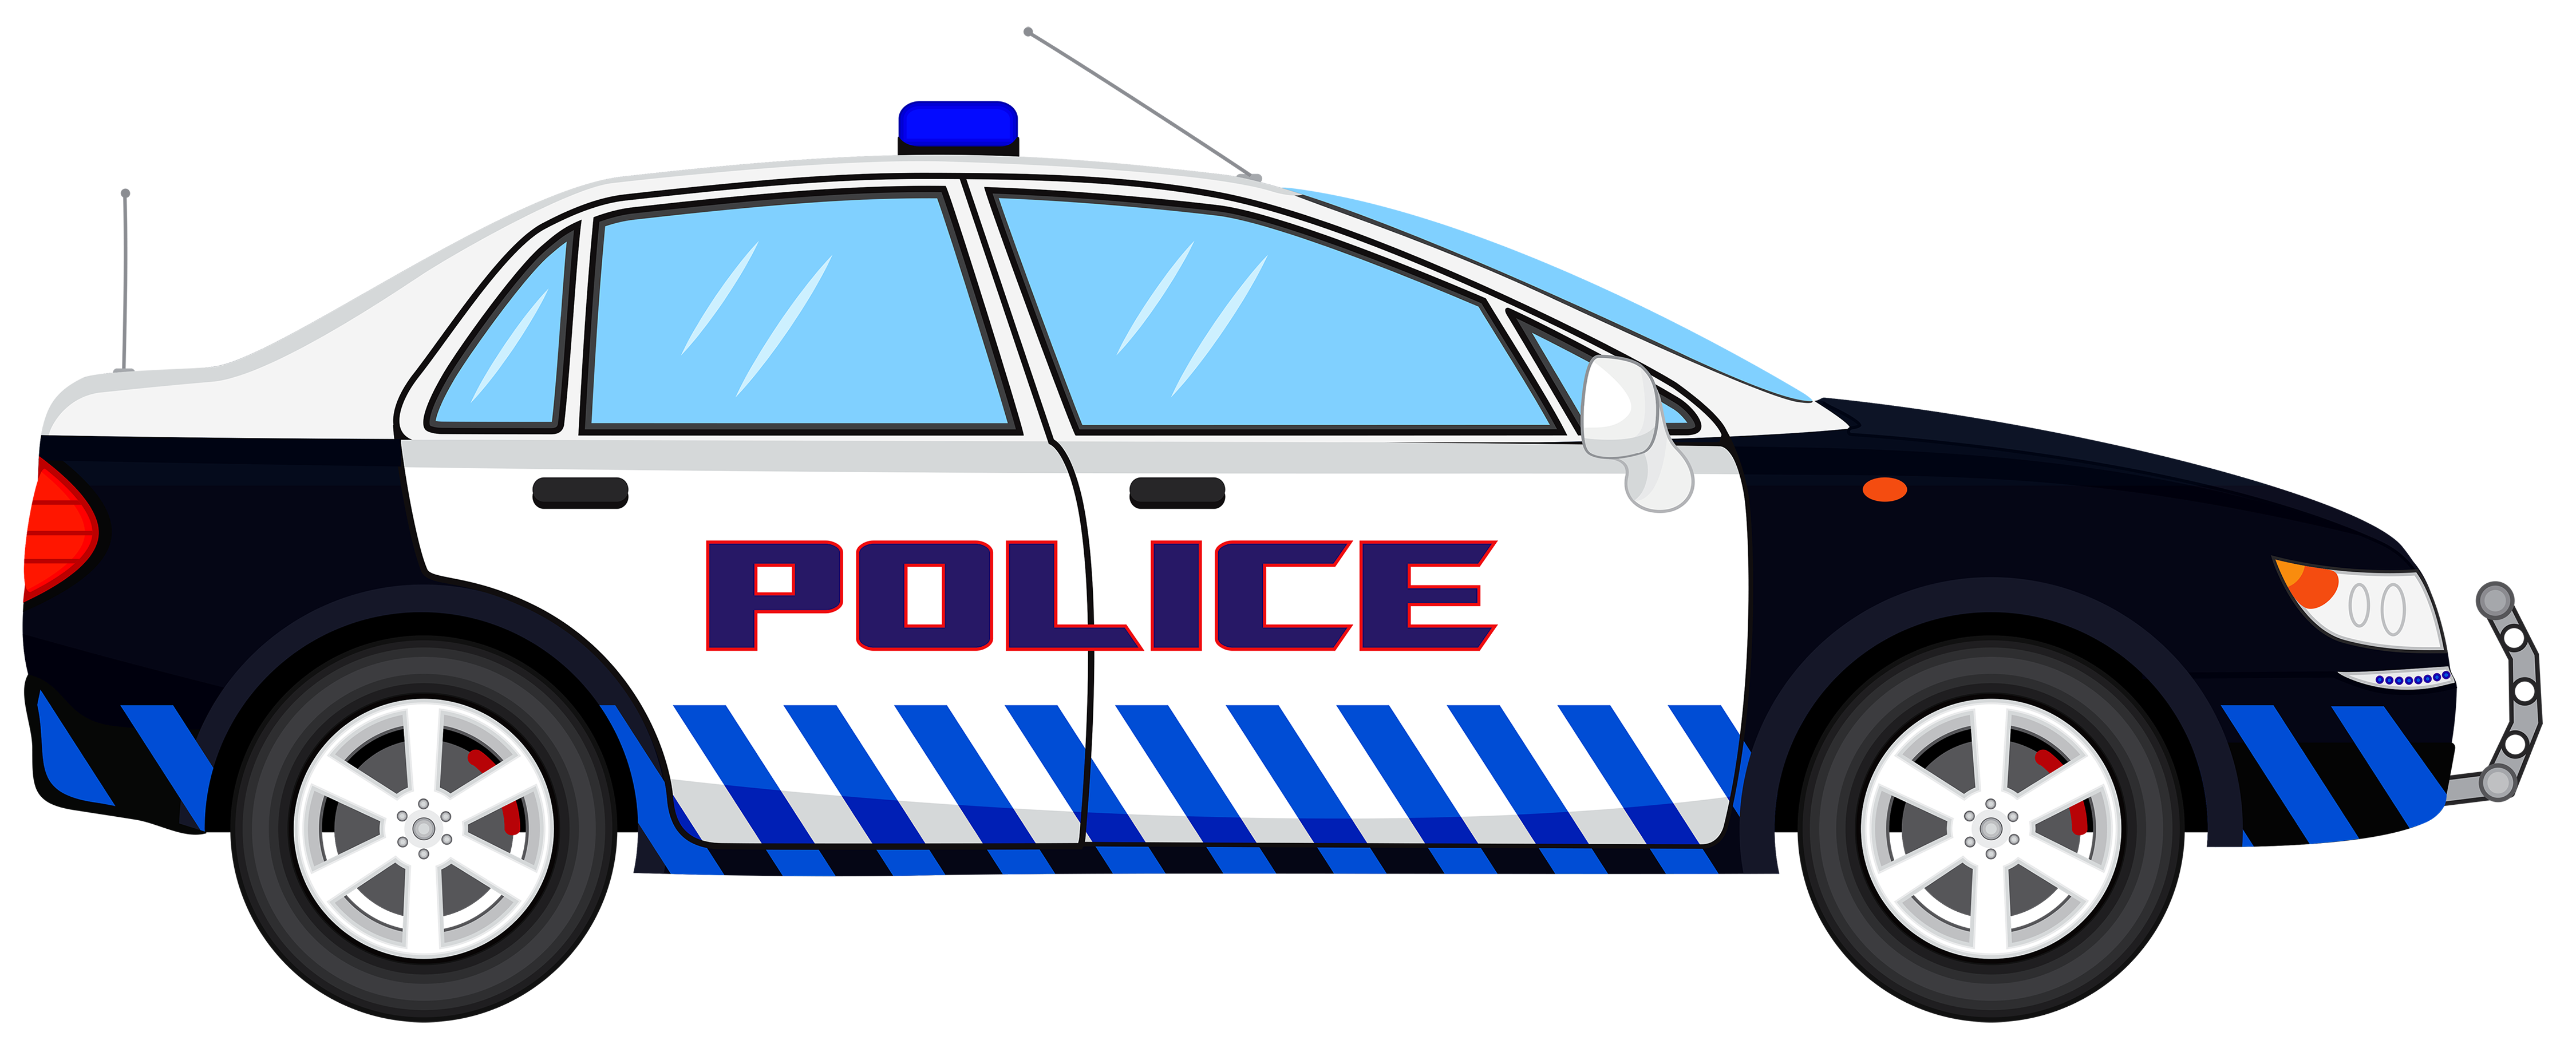 Police Car Transparent Image Png Image Clipart